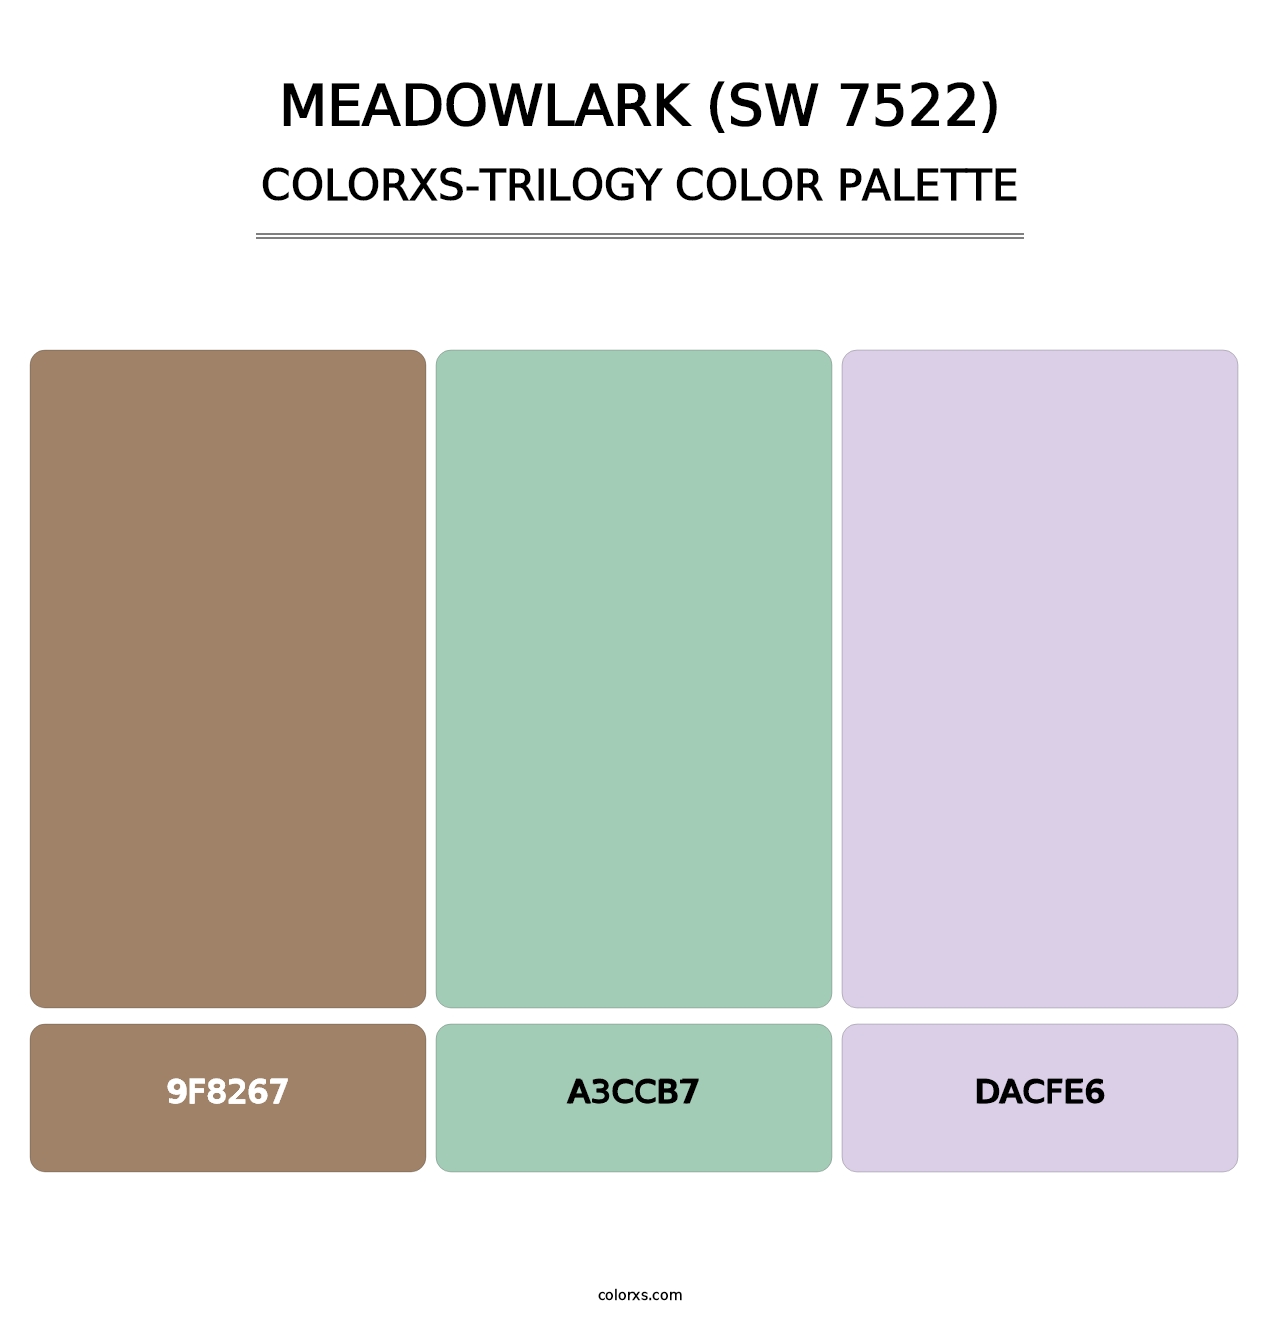 Meadowlark (SW 7522) - Colorxs Trilogy Palette